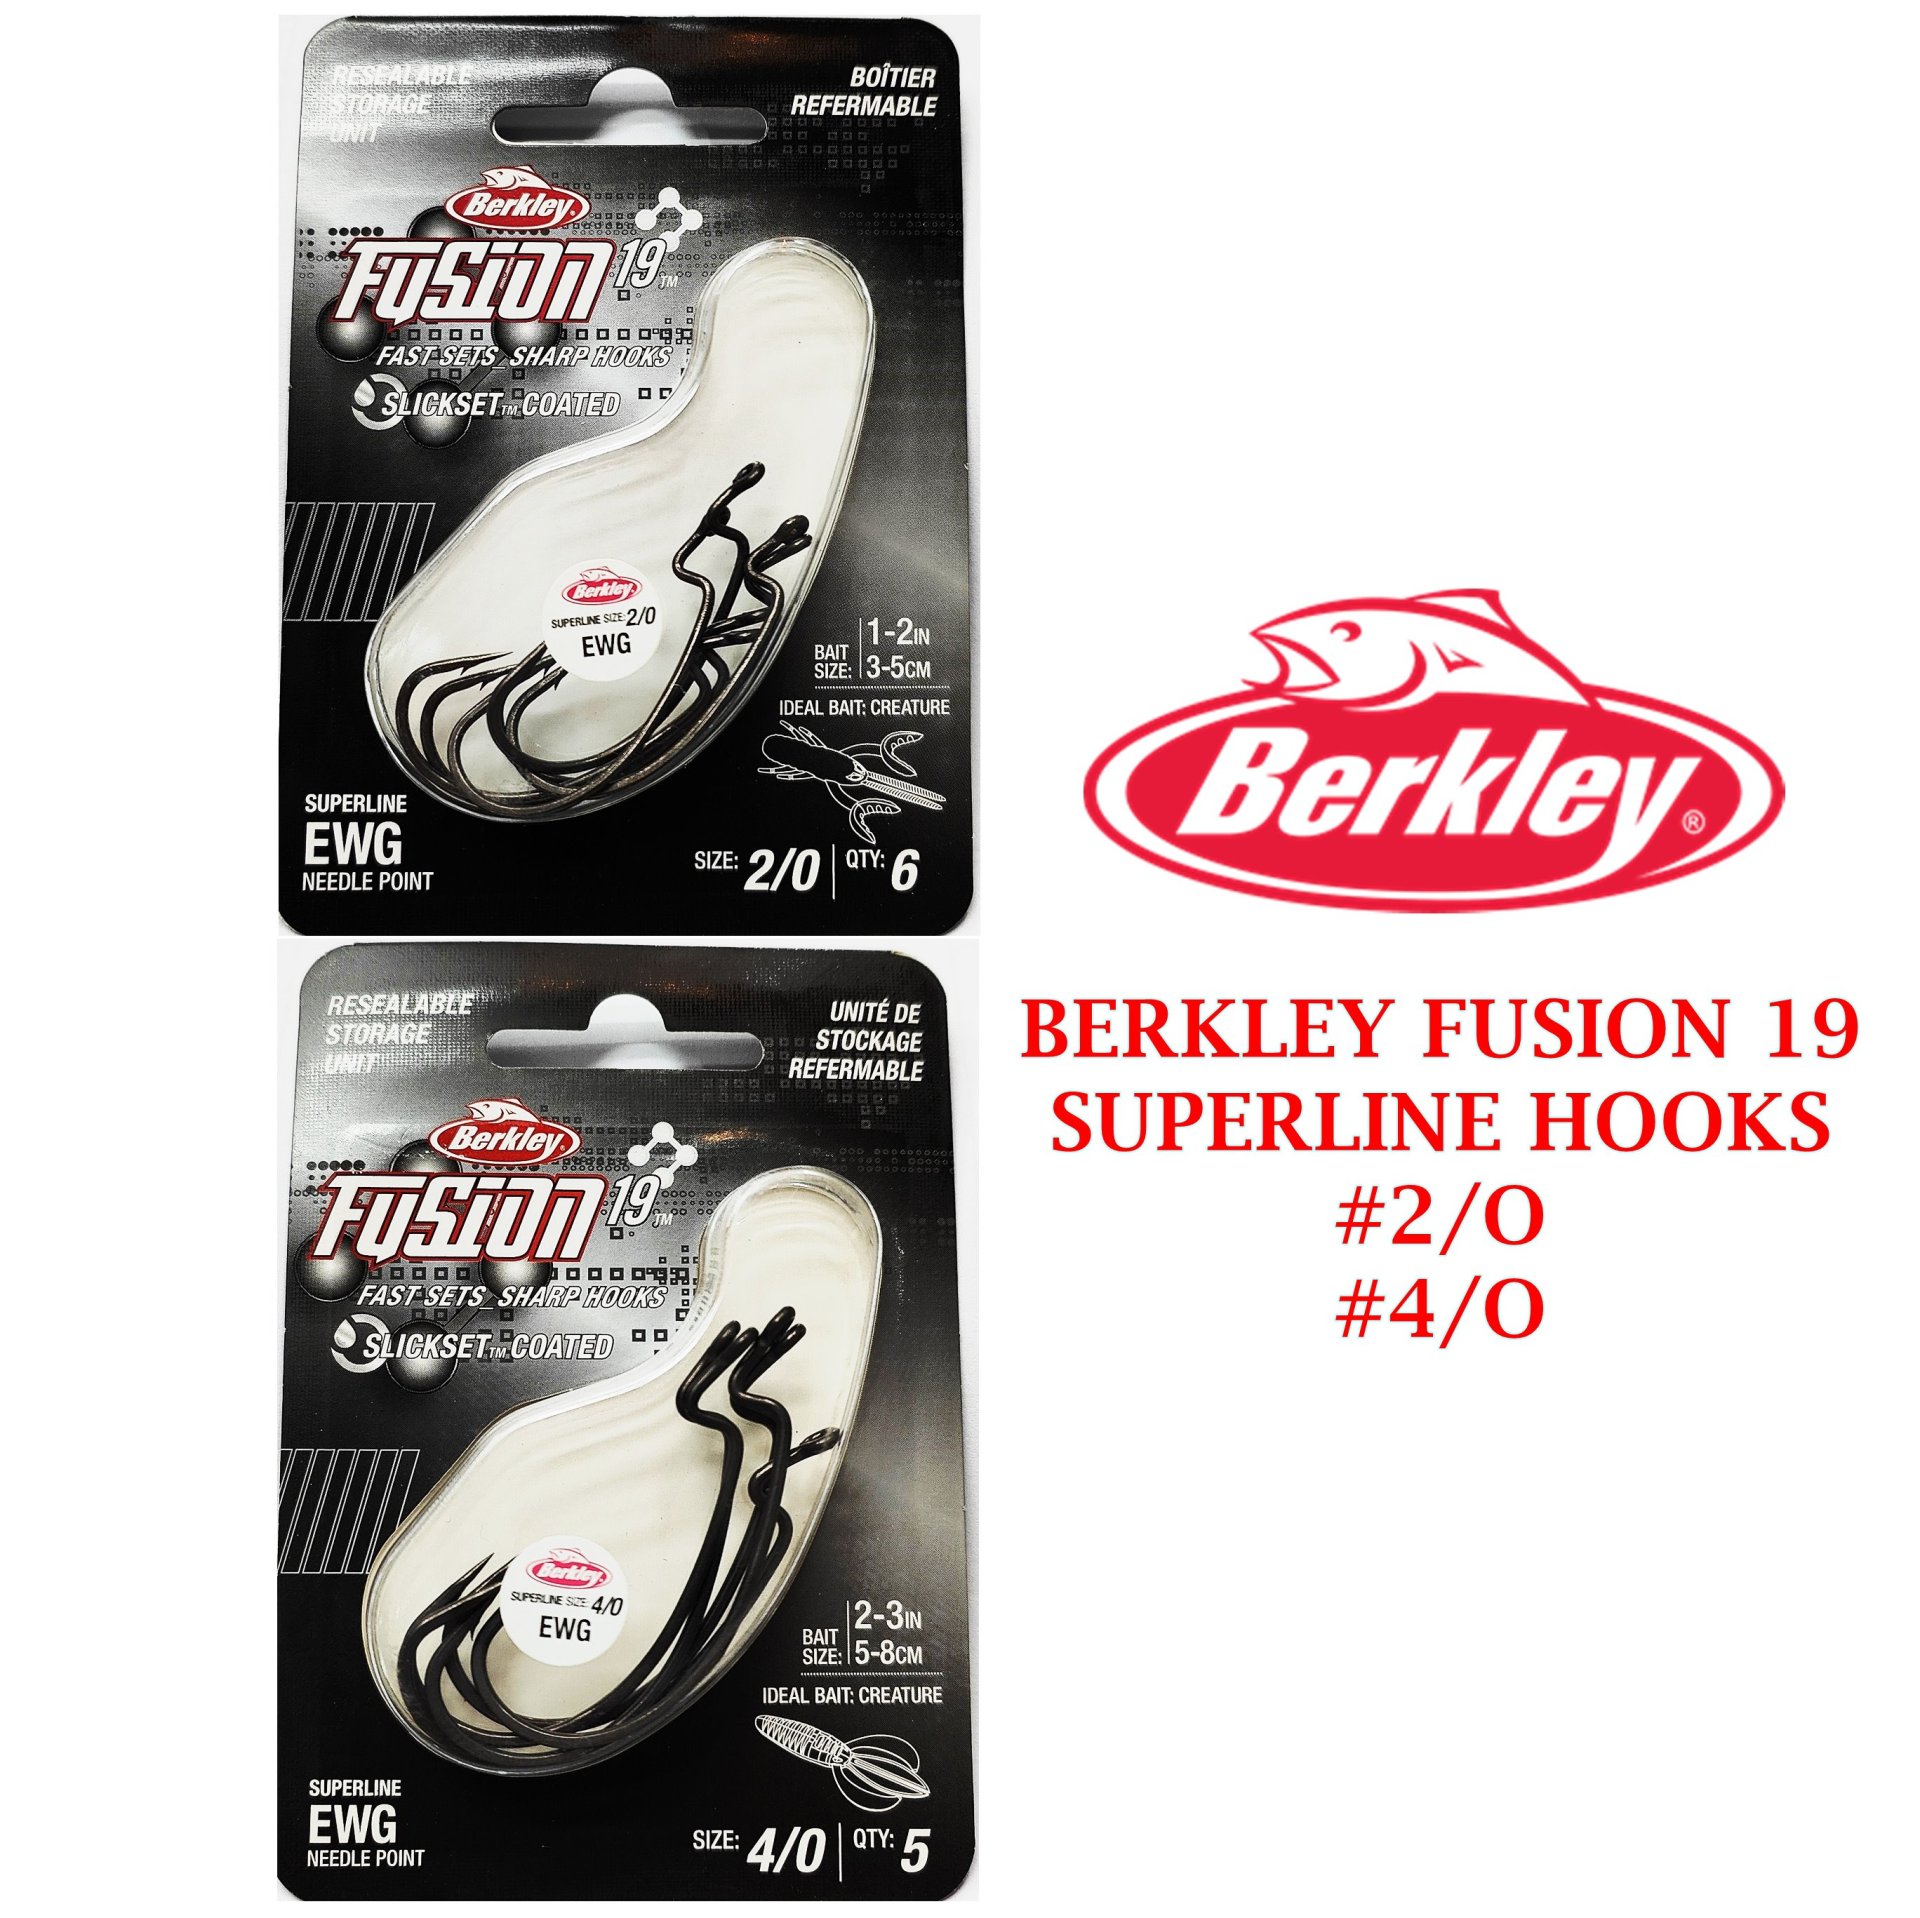 Berkley Fusion19 ™ EWG Hook, size: 4/0 - 7/0, at Rs 550.00, मछली पकड़ने  का काटा - Cabral Outdoors, Udupi